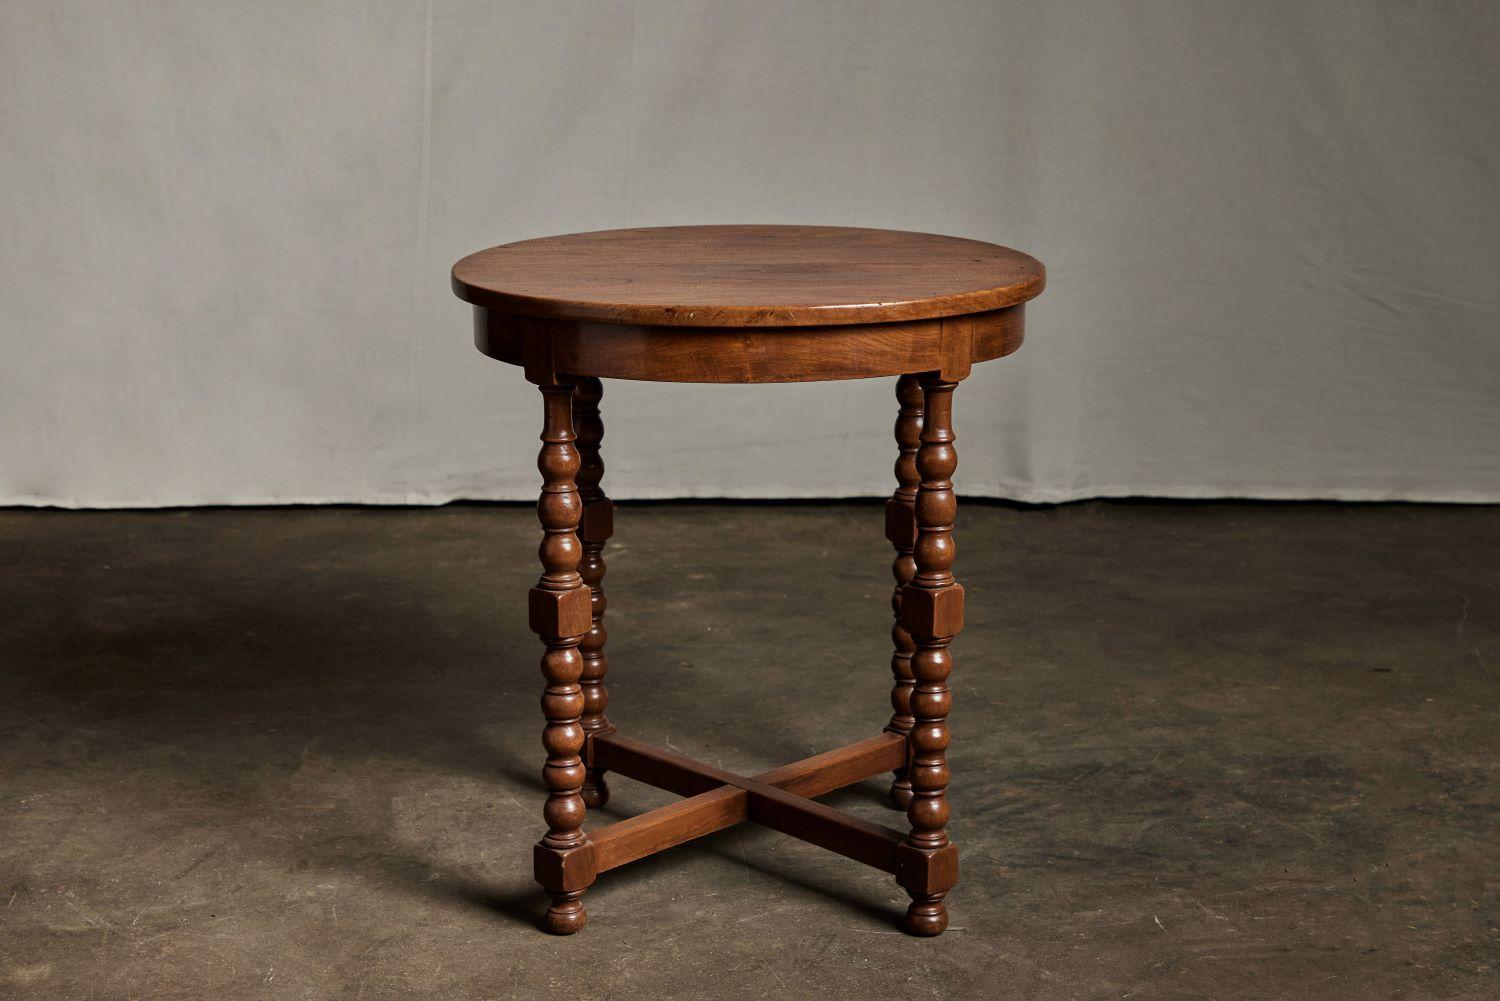 Antique round occasional table. Turned legs. Teak hardwood. Tropical-Dutch, Indonesia. Circa 1920.